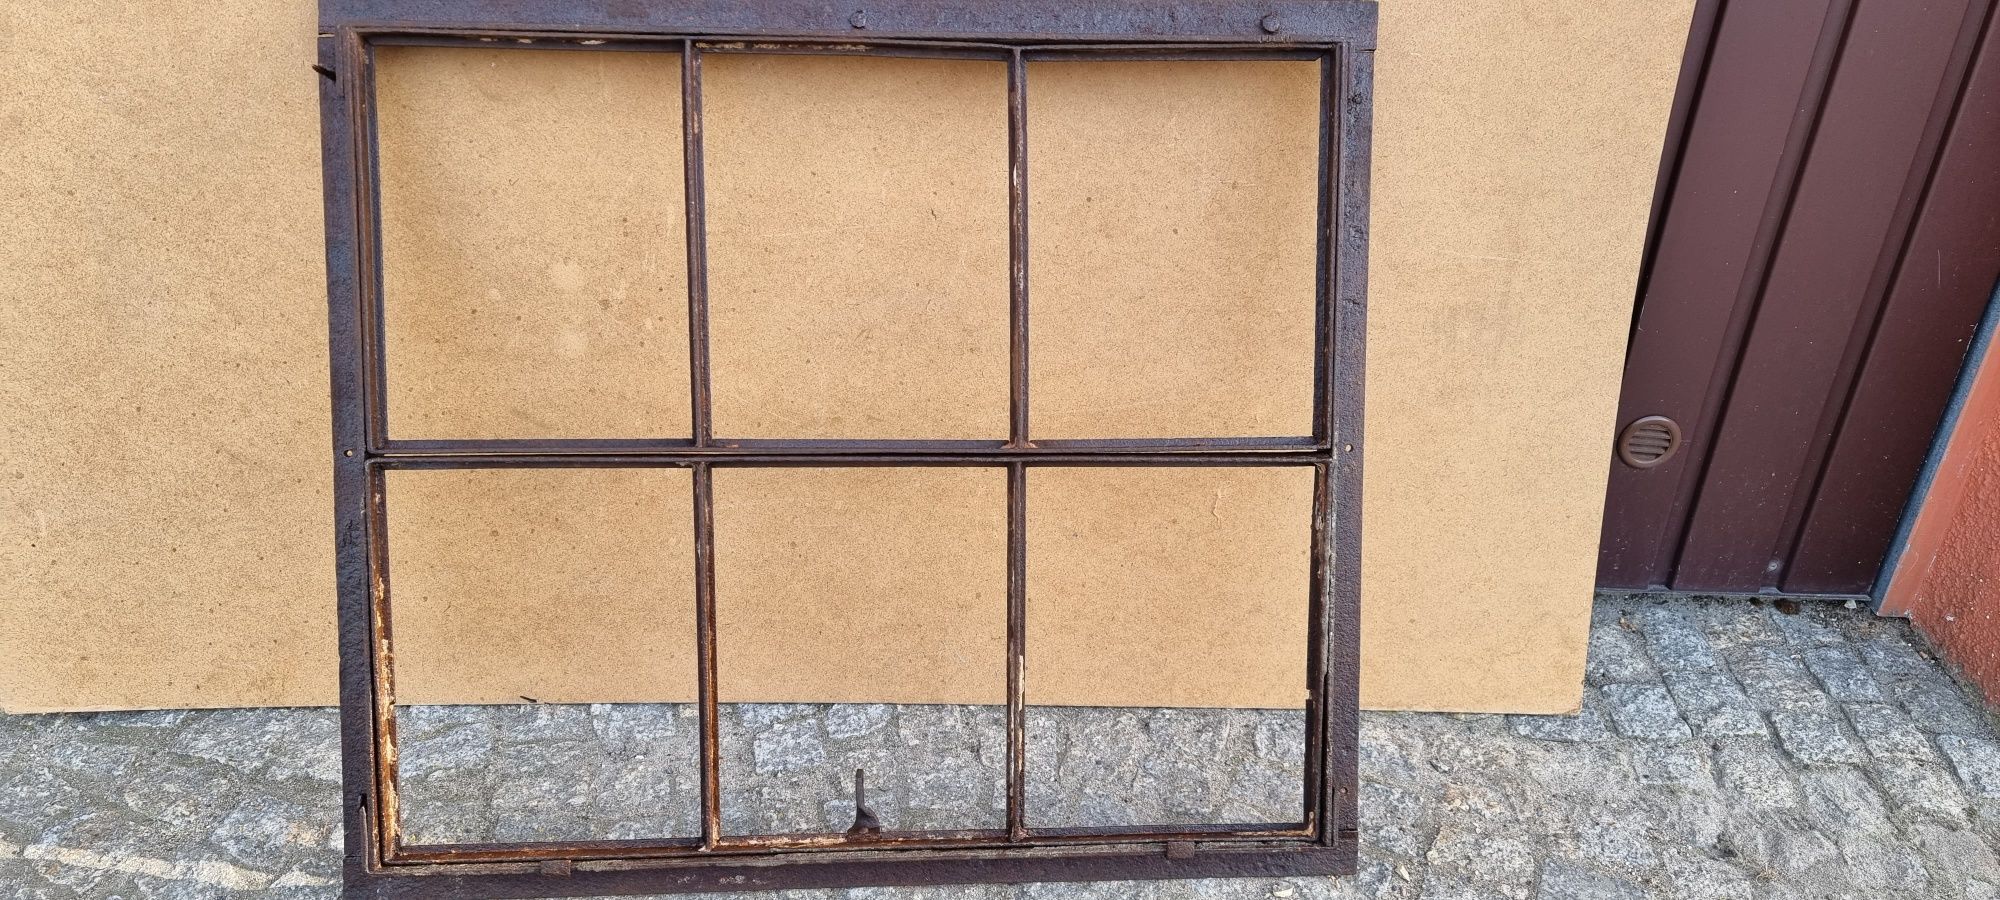 Stare okno metalowo-żeliwne,loft, vintage,PRL